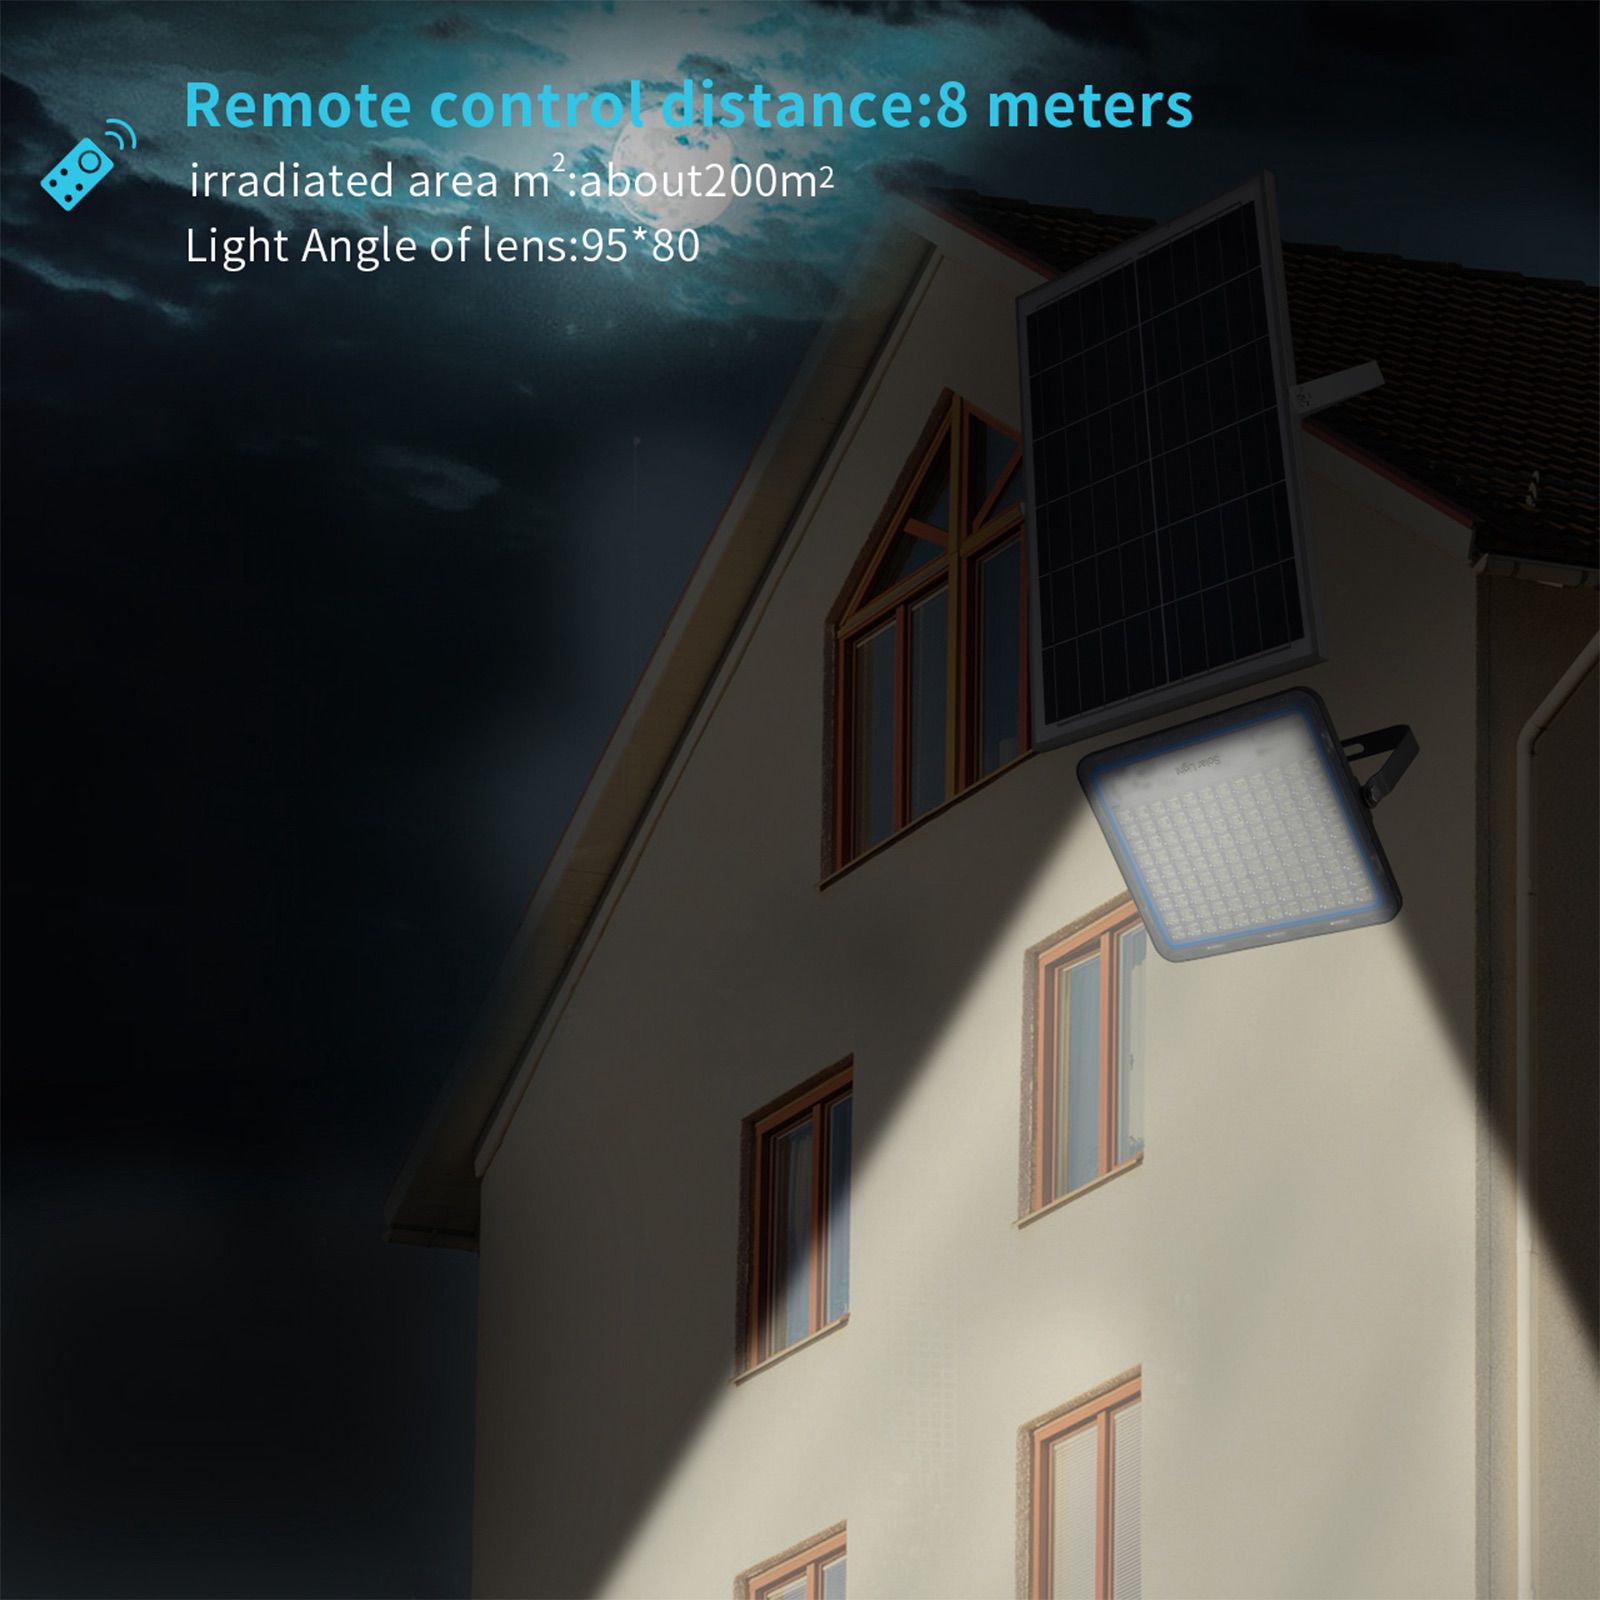 Remote Control 50w 100w 150w 200w Solar LED Flood Light Rechargeable Floodlight 